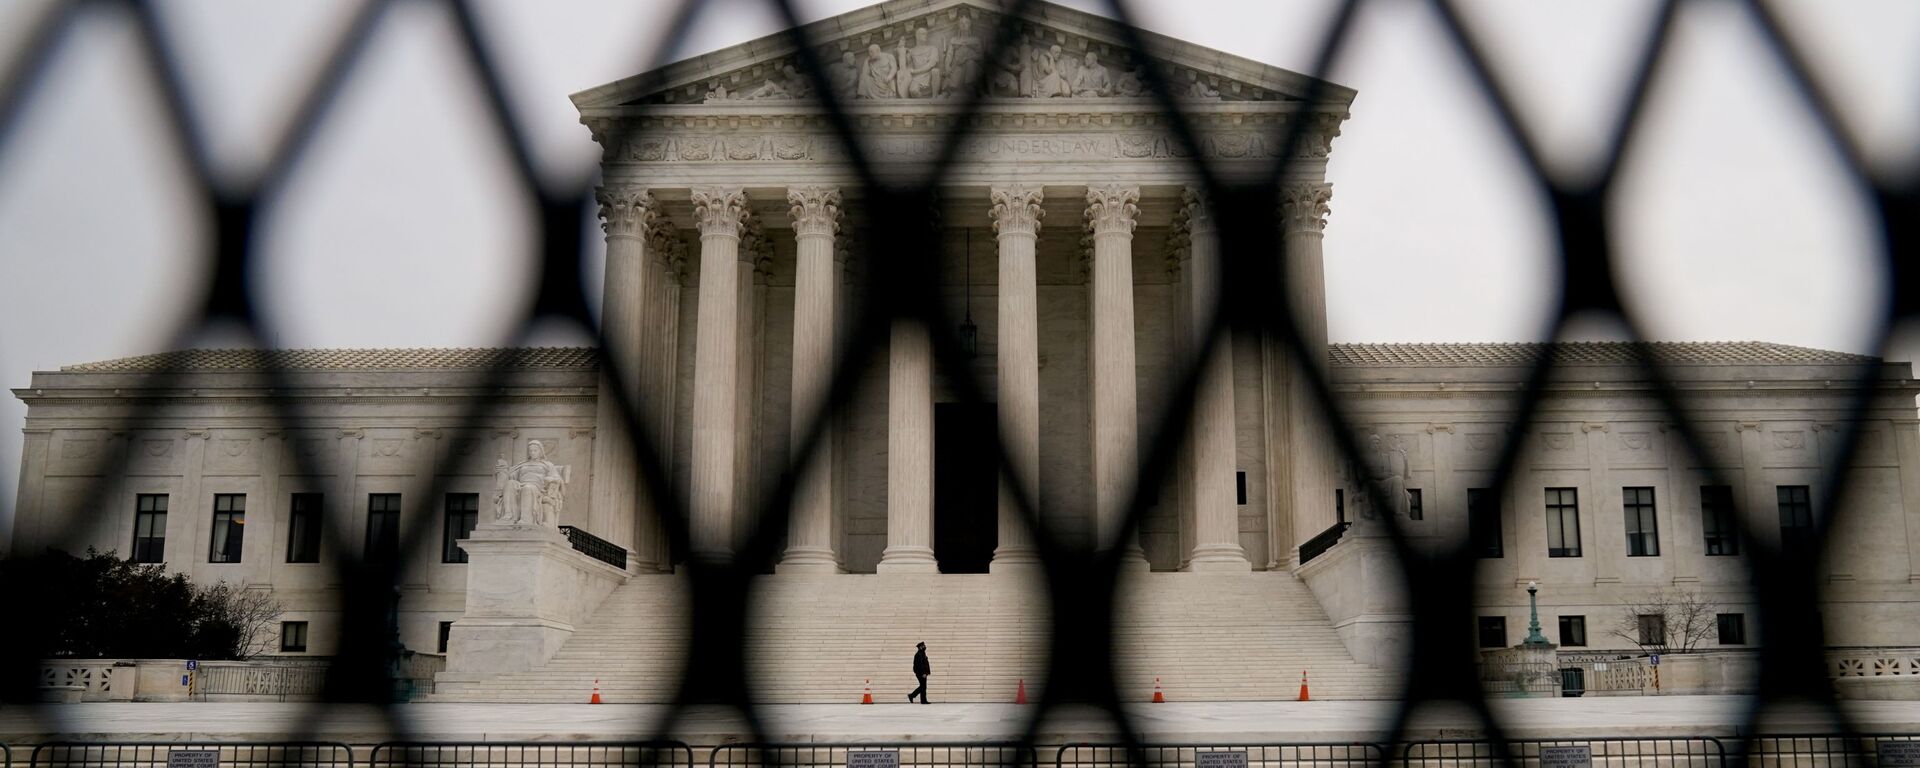 Security fencing surrounds the U.S. Supreme Court - Sputnik International, 1920, 03.05.2022